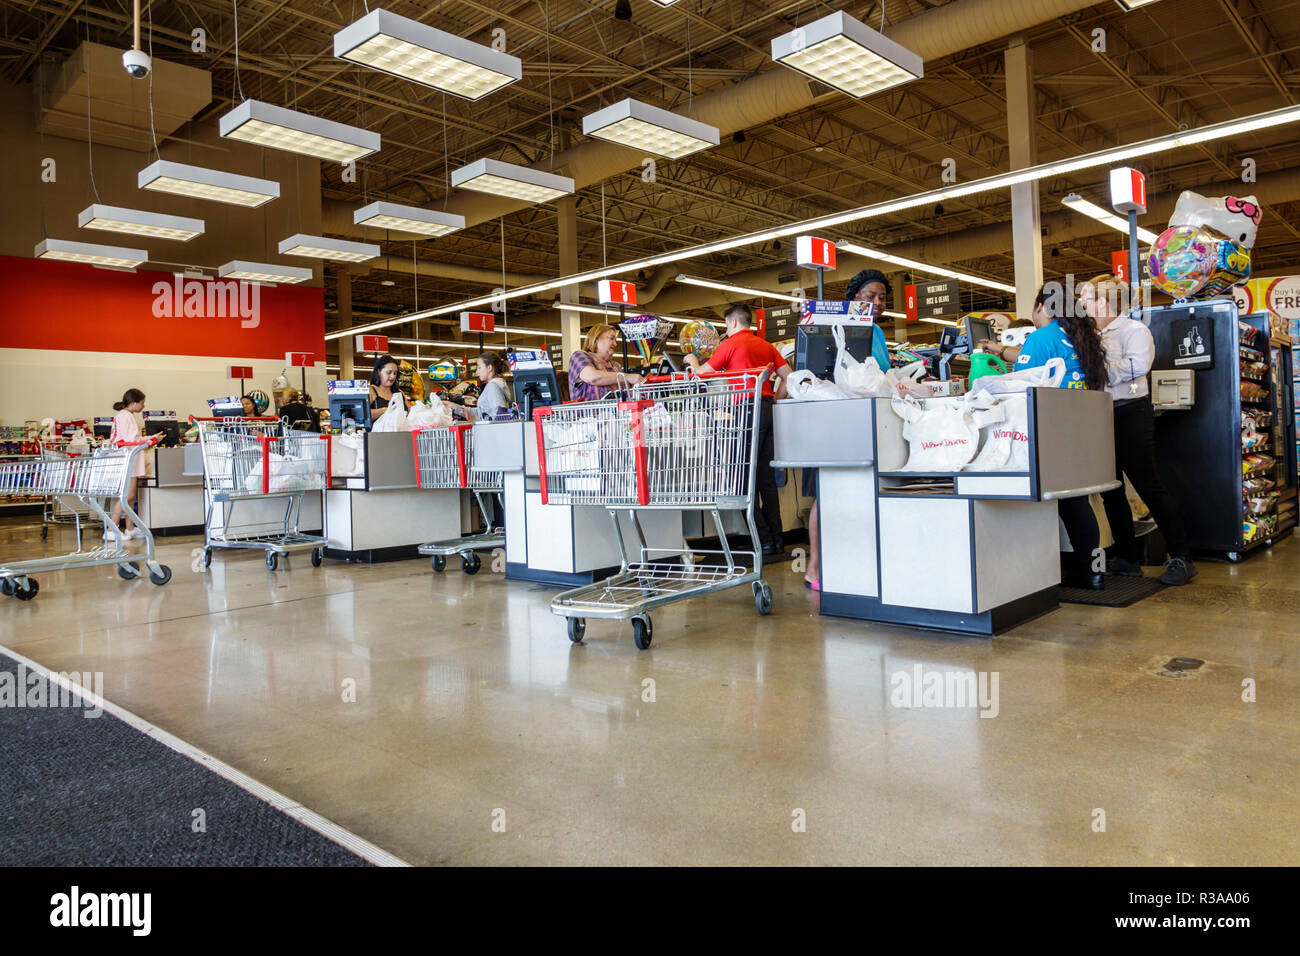 Miami Florida,Winn-Dixie,grocery store supermarket,food,checkout line queue cashiers cashier,FL181115018 Stock Photo